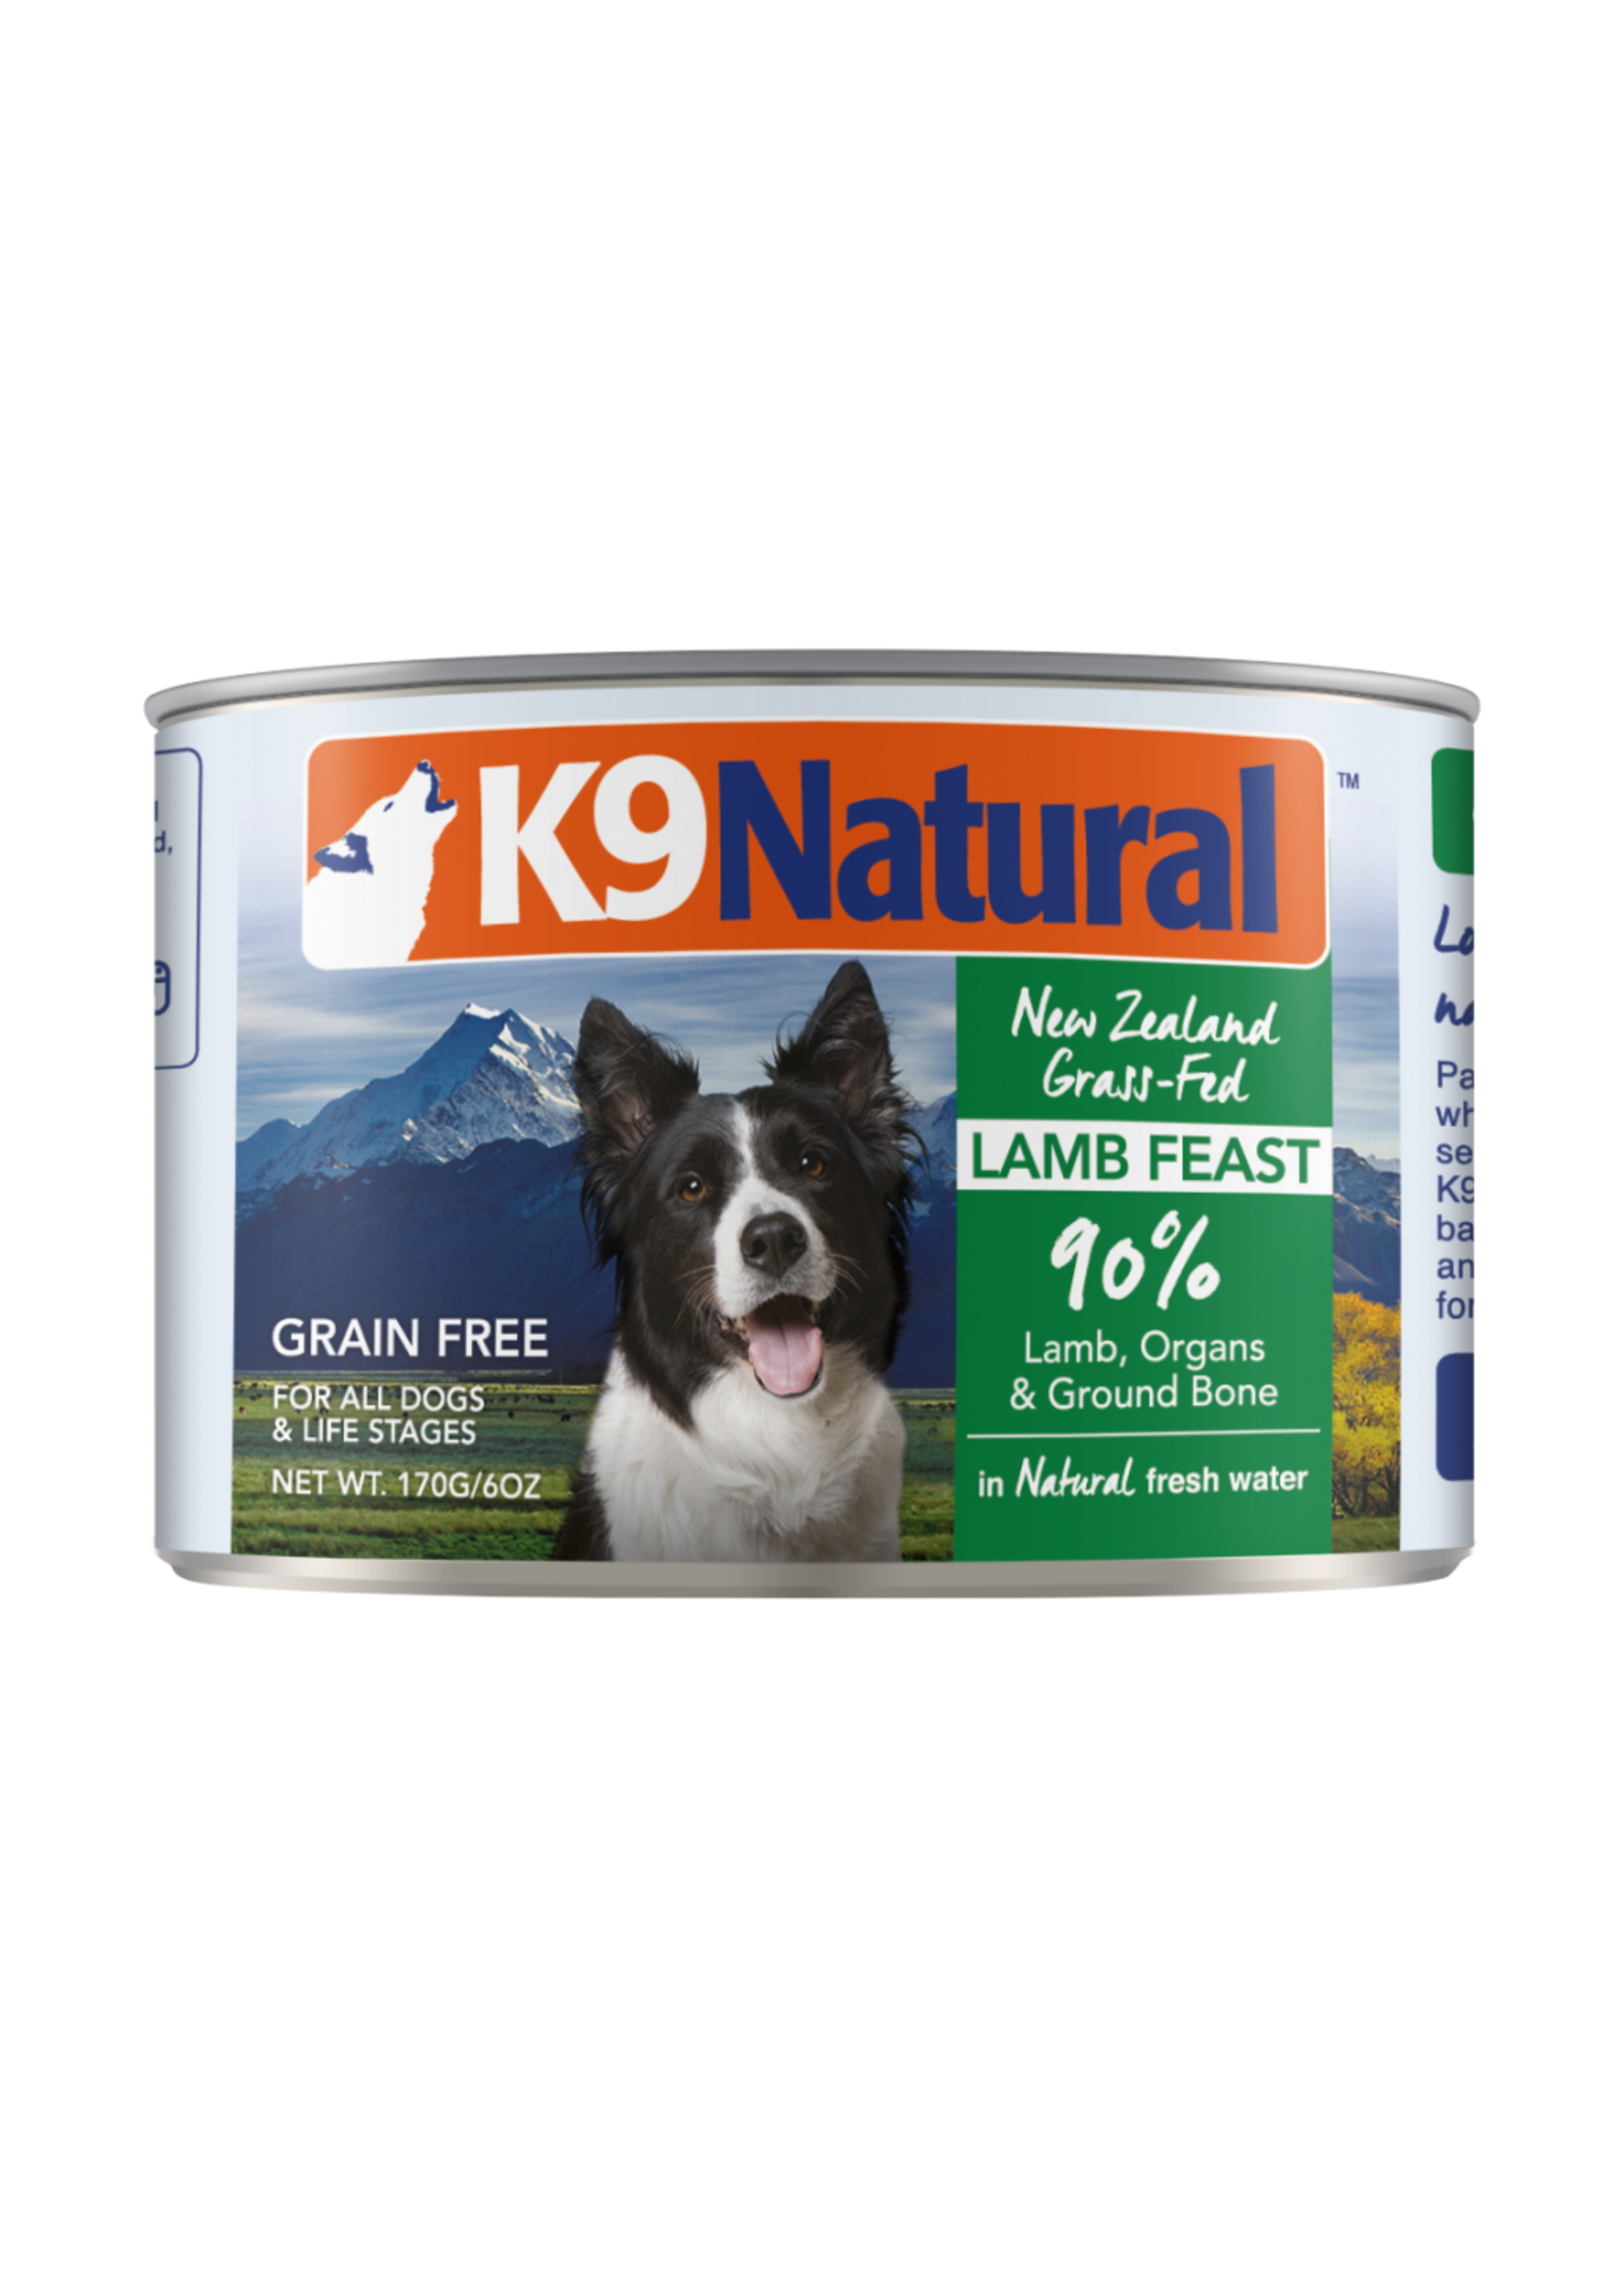 Natural Pet Food Group K9 Natural, Dog, Lamb, Can